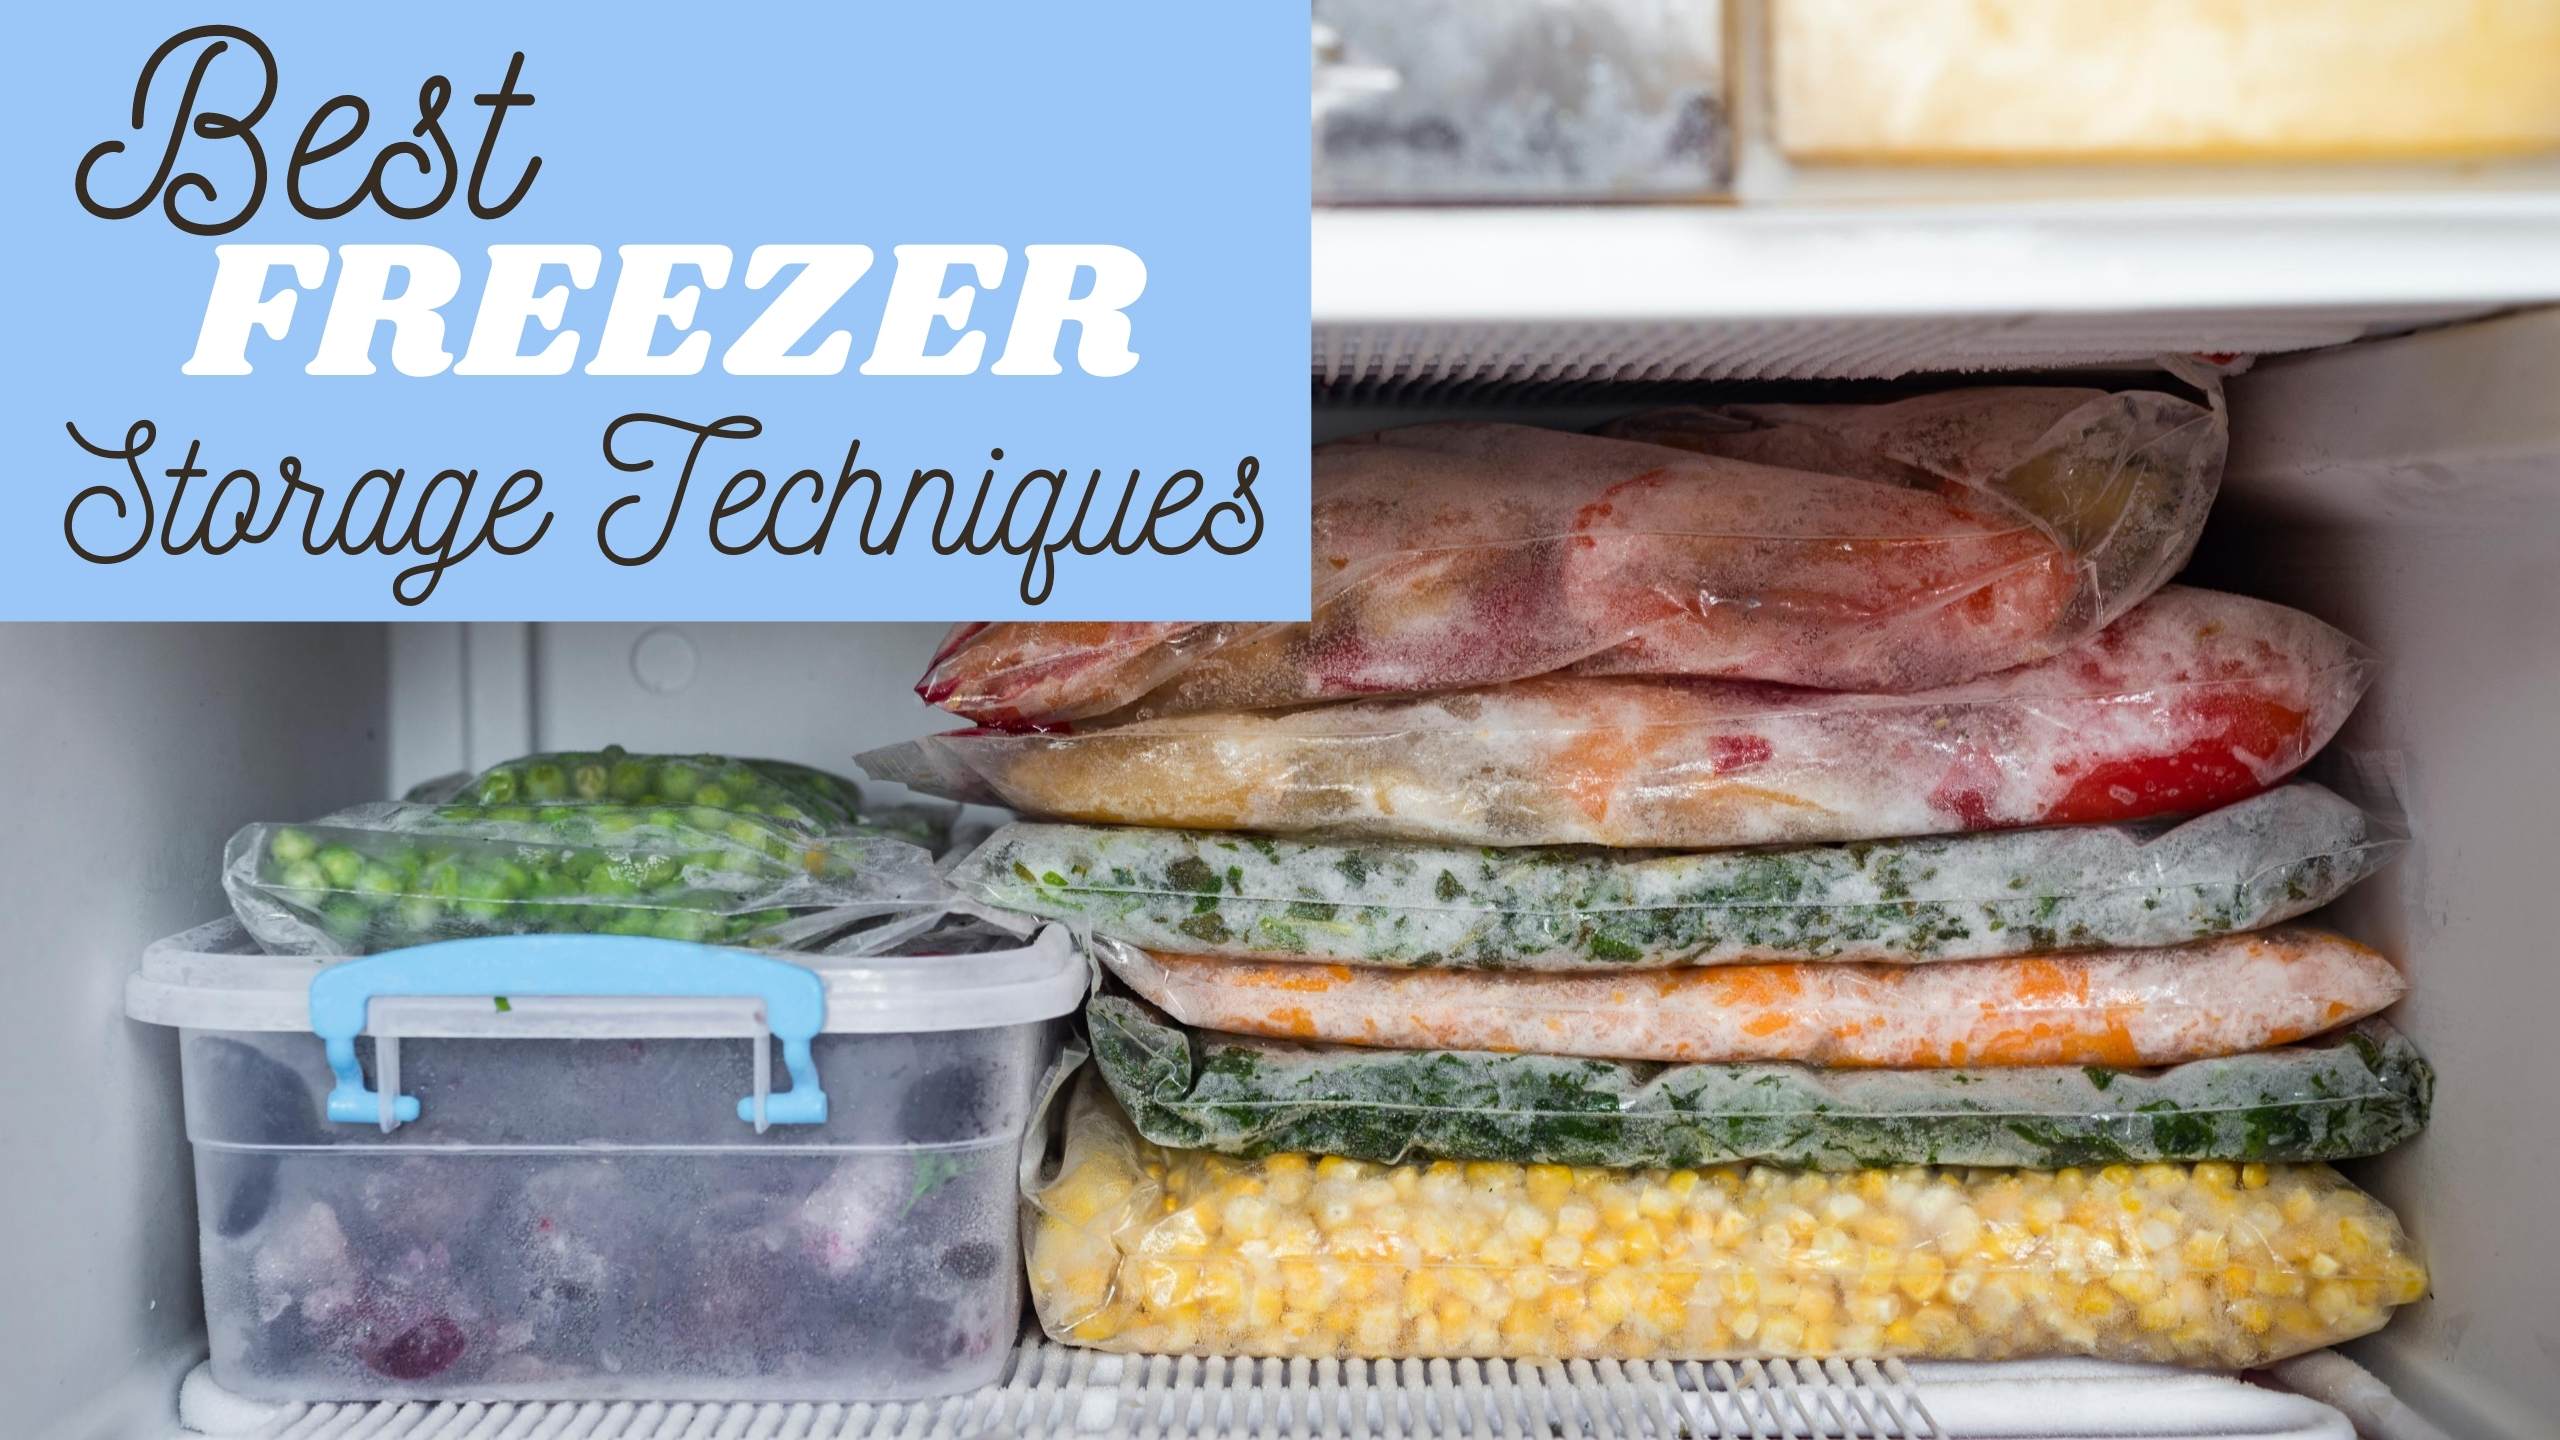 Freezer Storage 101: Freezing Techniques :: Southern Savers